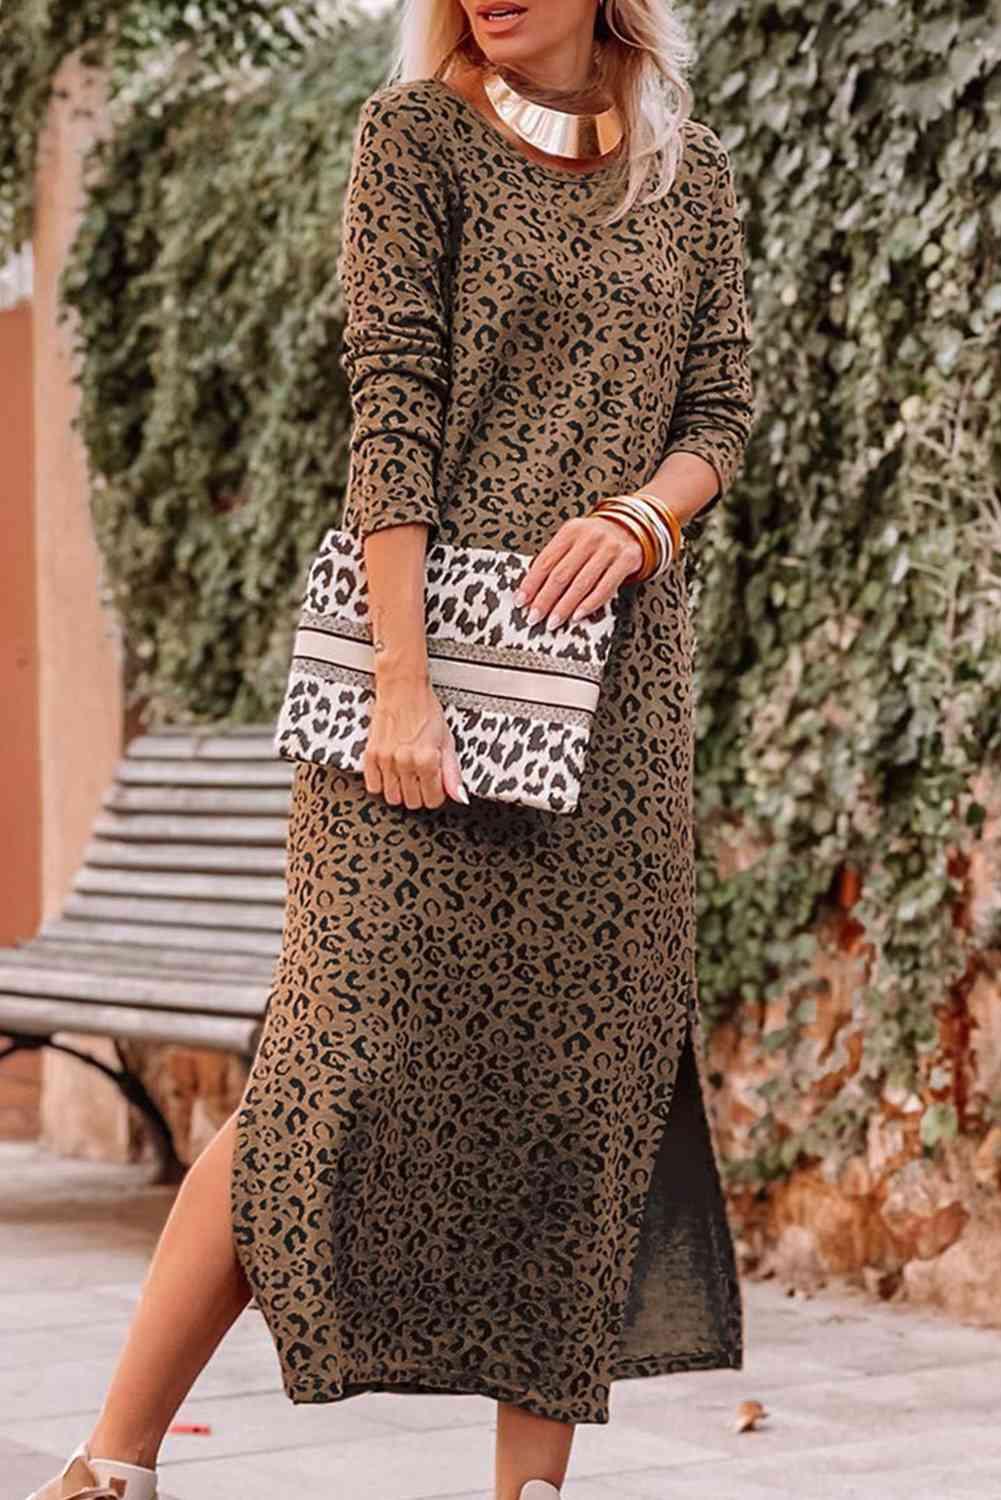 a woman wearing a leopard print dress and heels